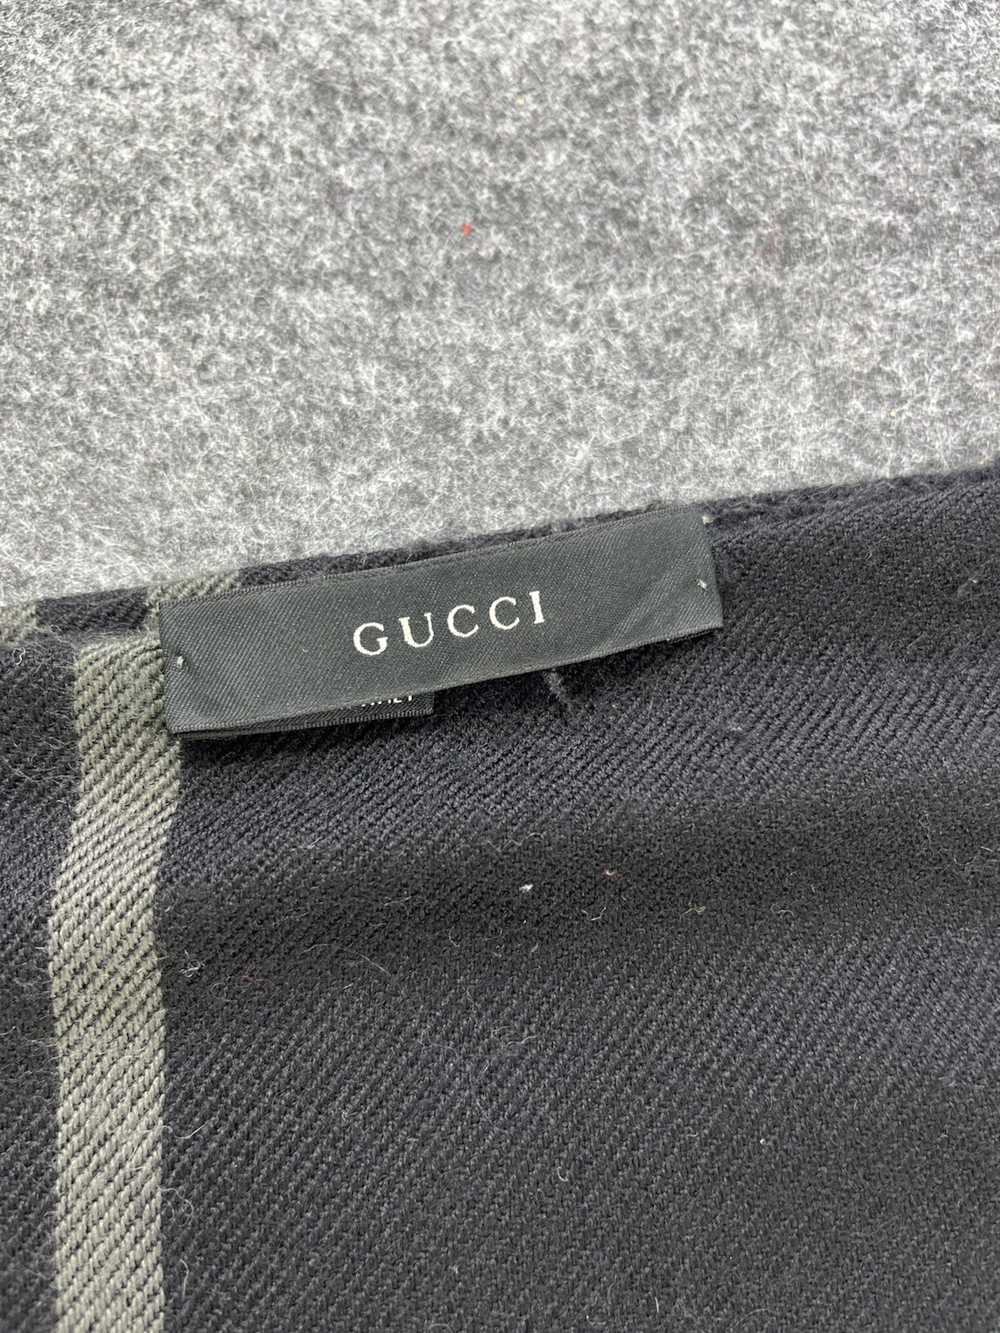 Vintage Gucci Scarf / Muffler / Neckwear T188 - image 10